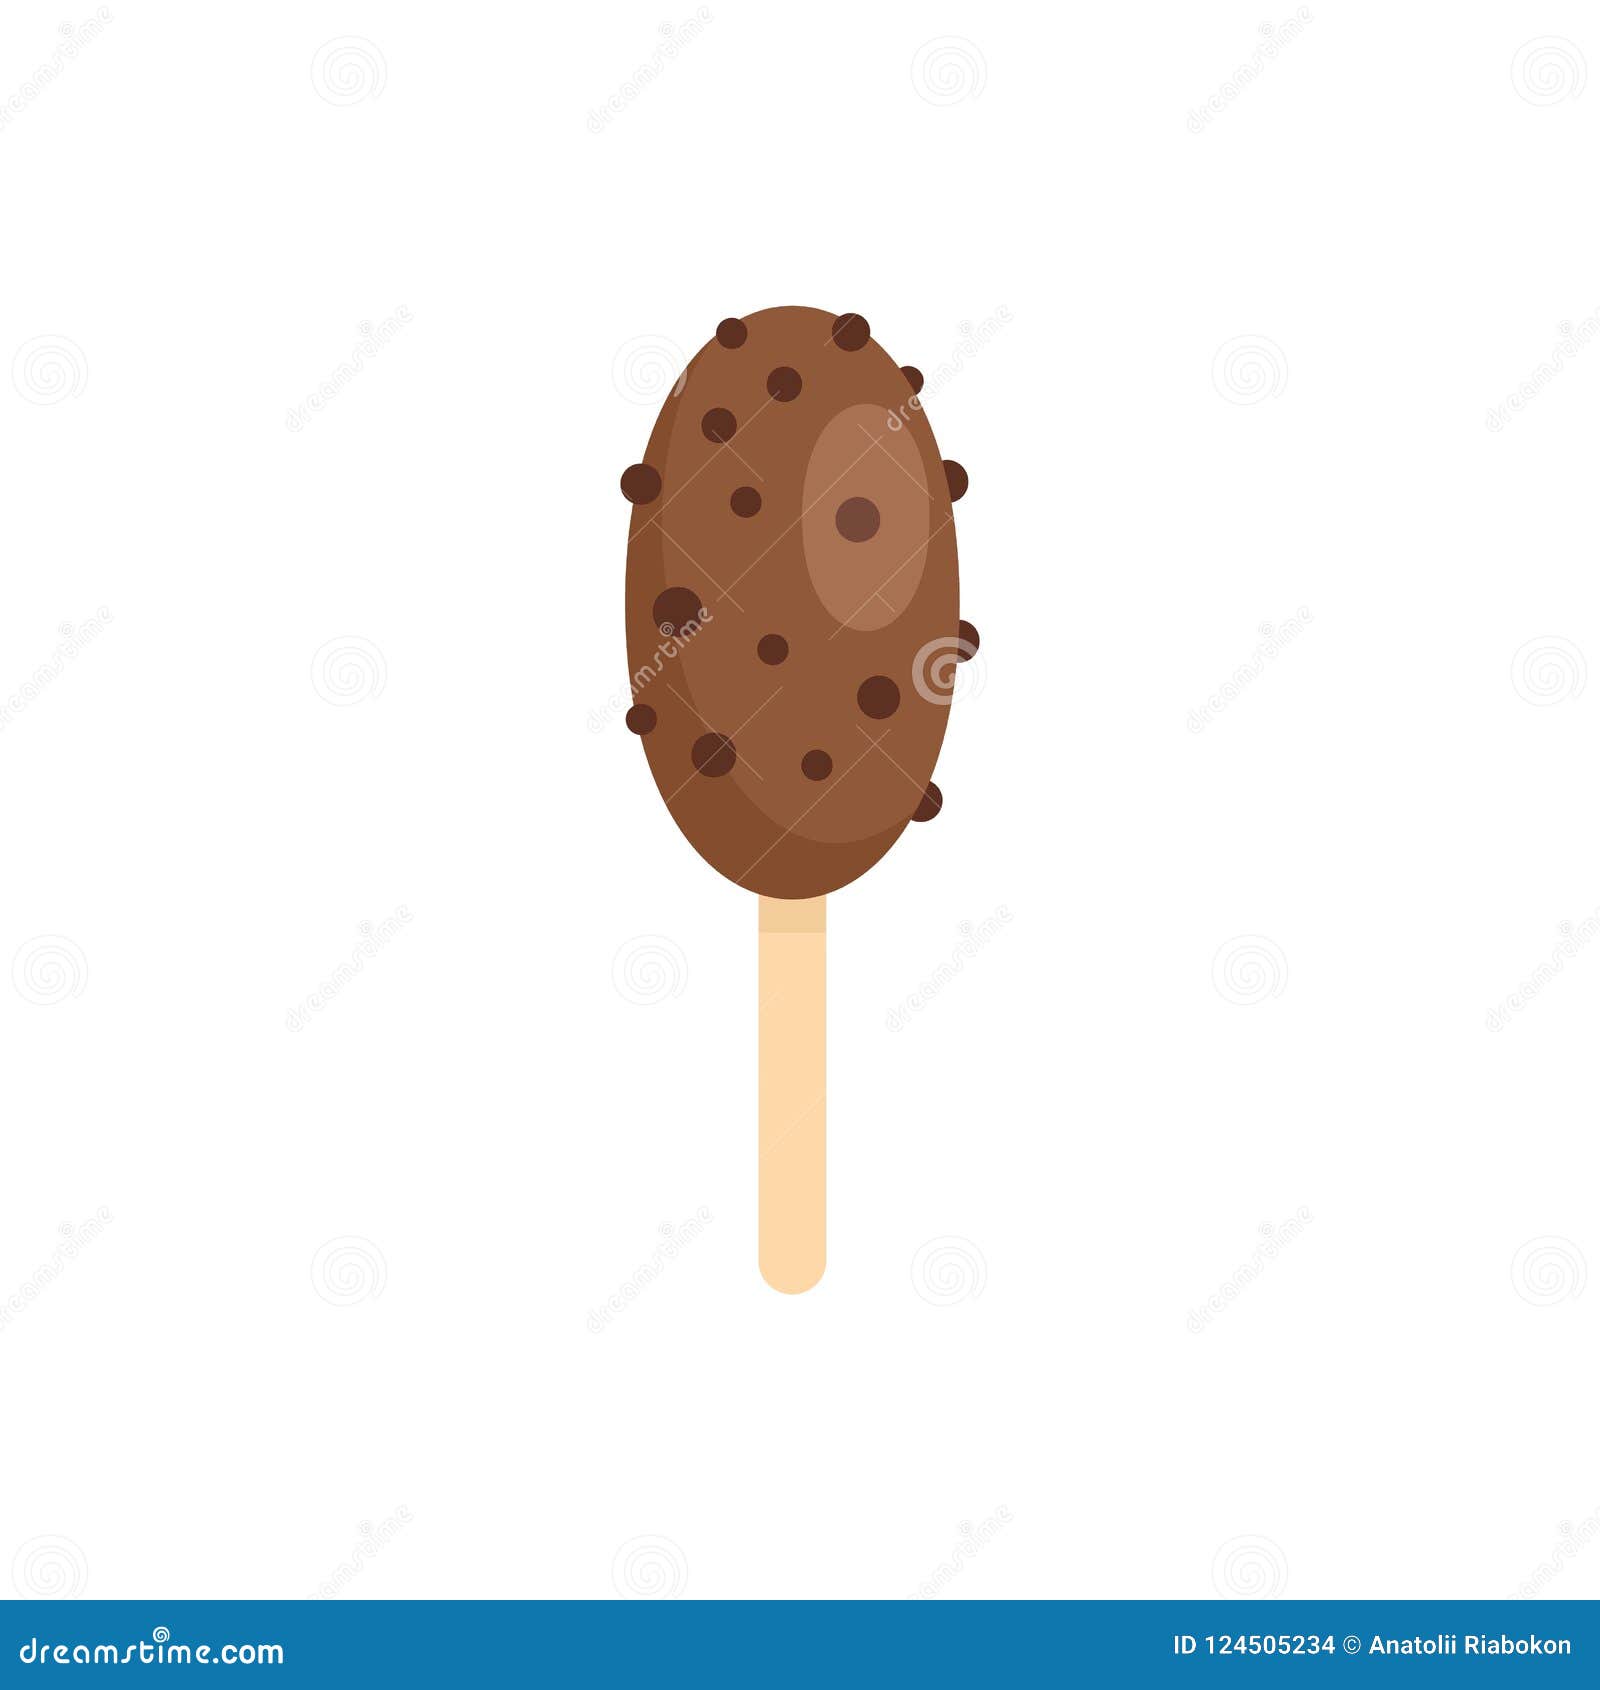 elipse ice cream icon, flat style